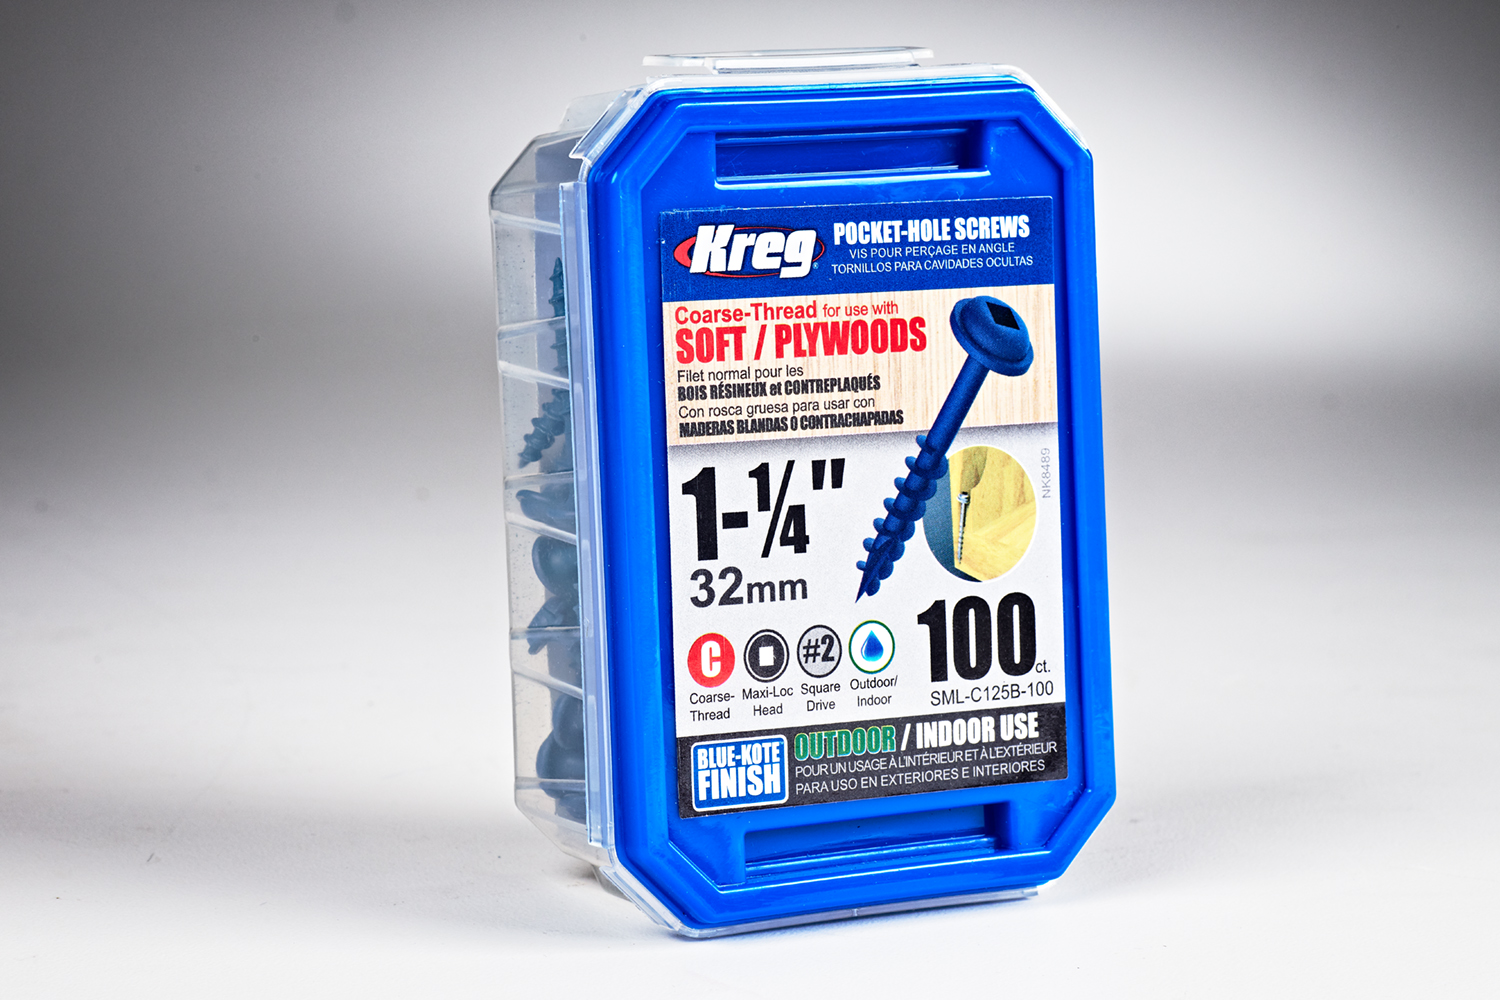 Kreg Blue-Kote WR Pocket Screws 1-1/4, #8 Coarse, Washer Head 100 Count  (SML-C125B-100)